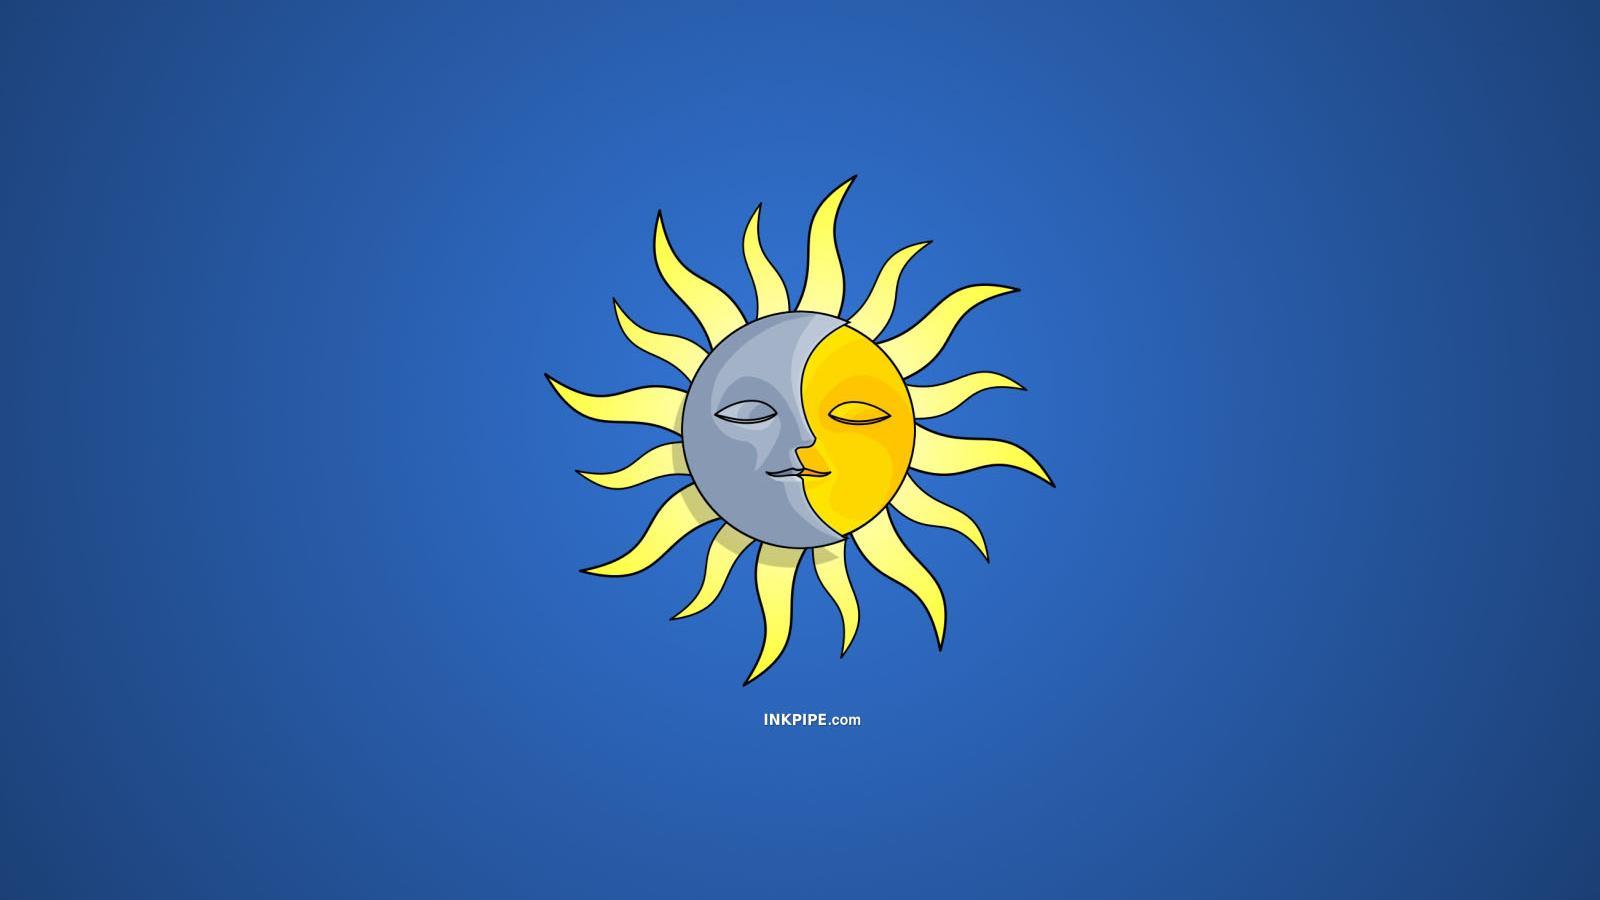 Sun Moon Stars Backgrounds Free Download  PixelsTalkNet